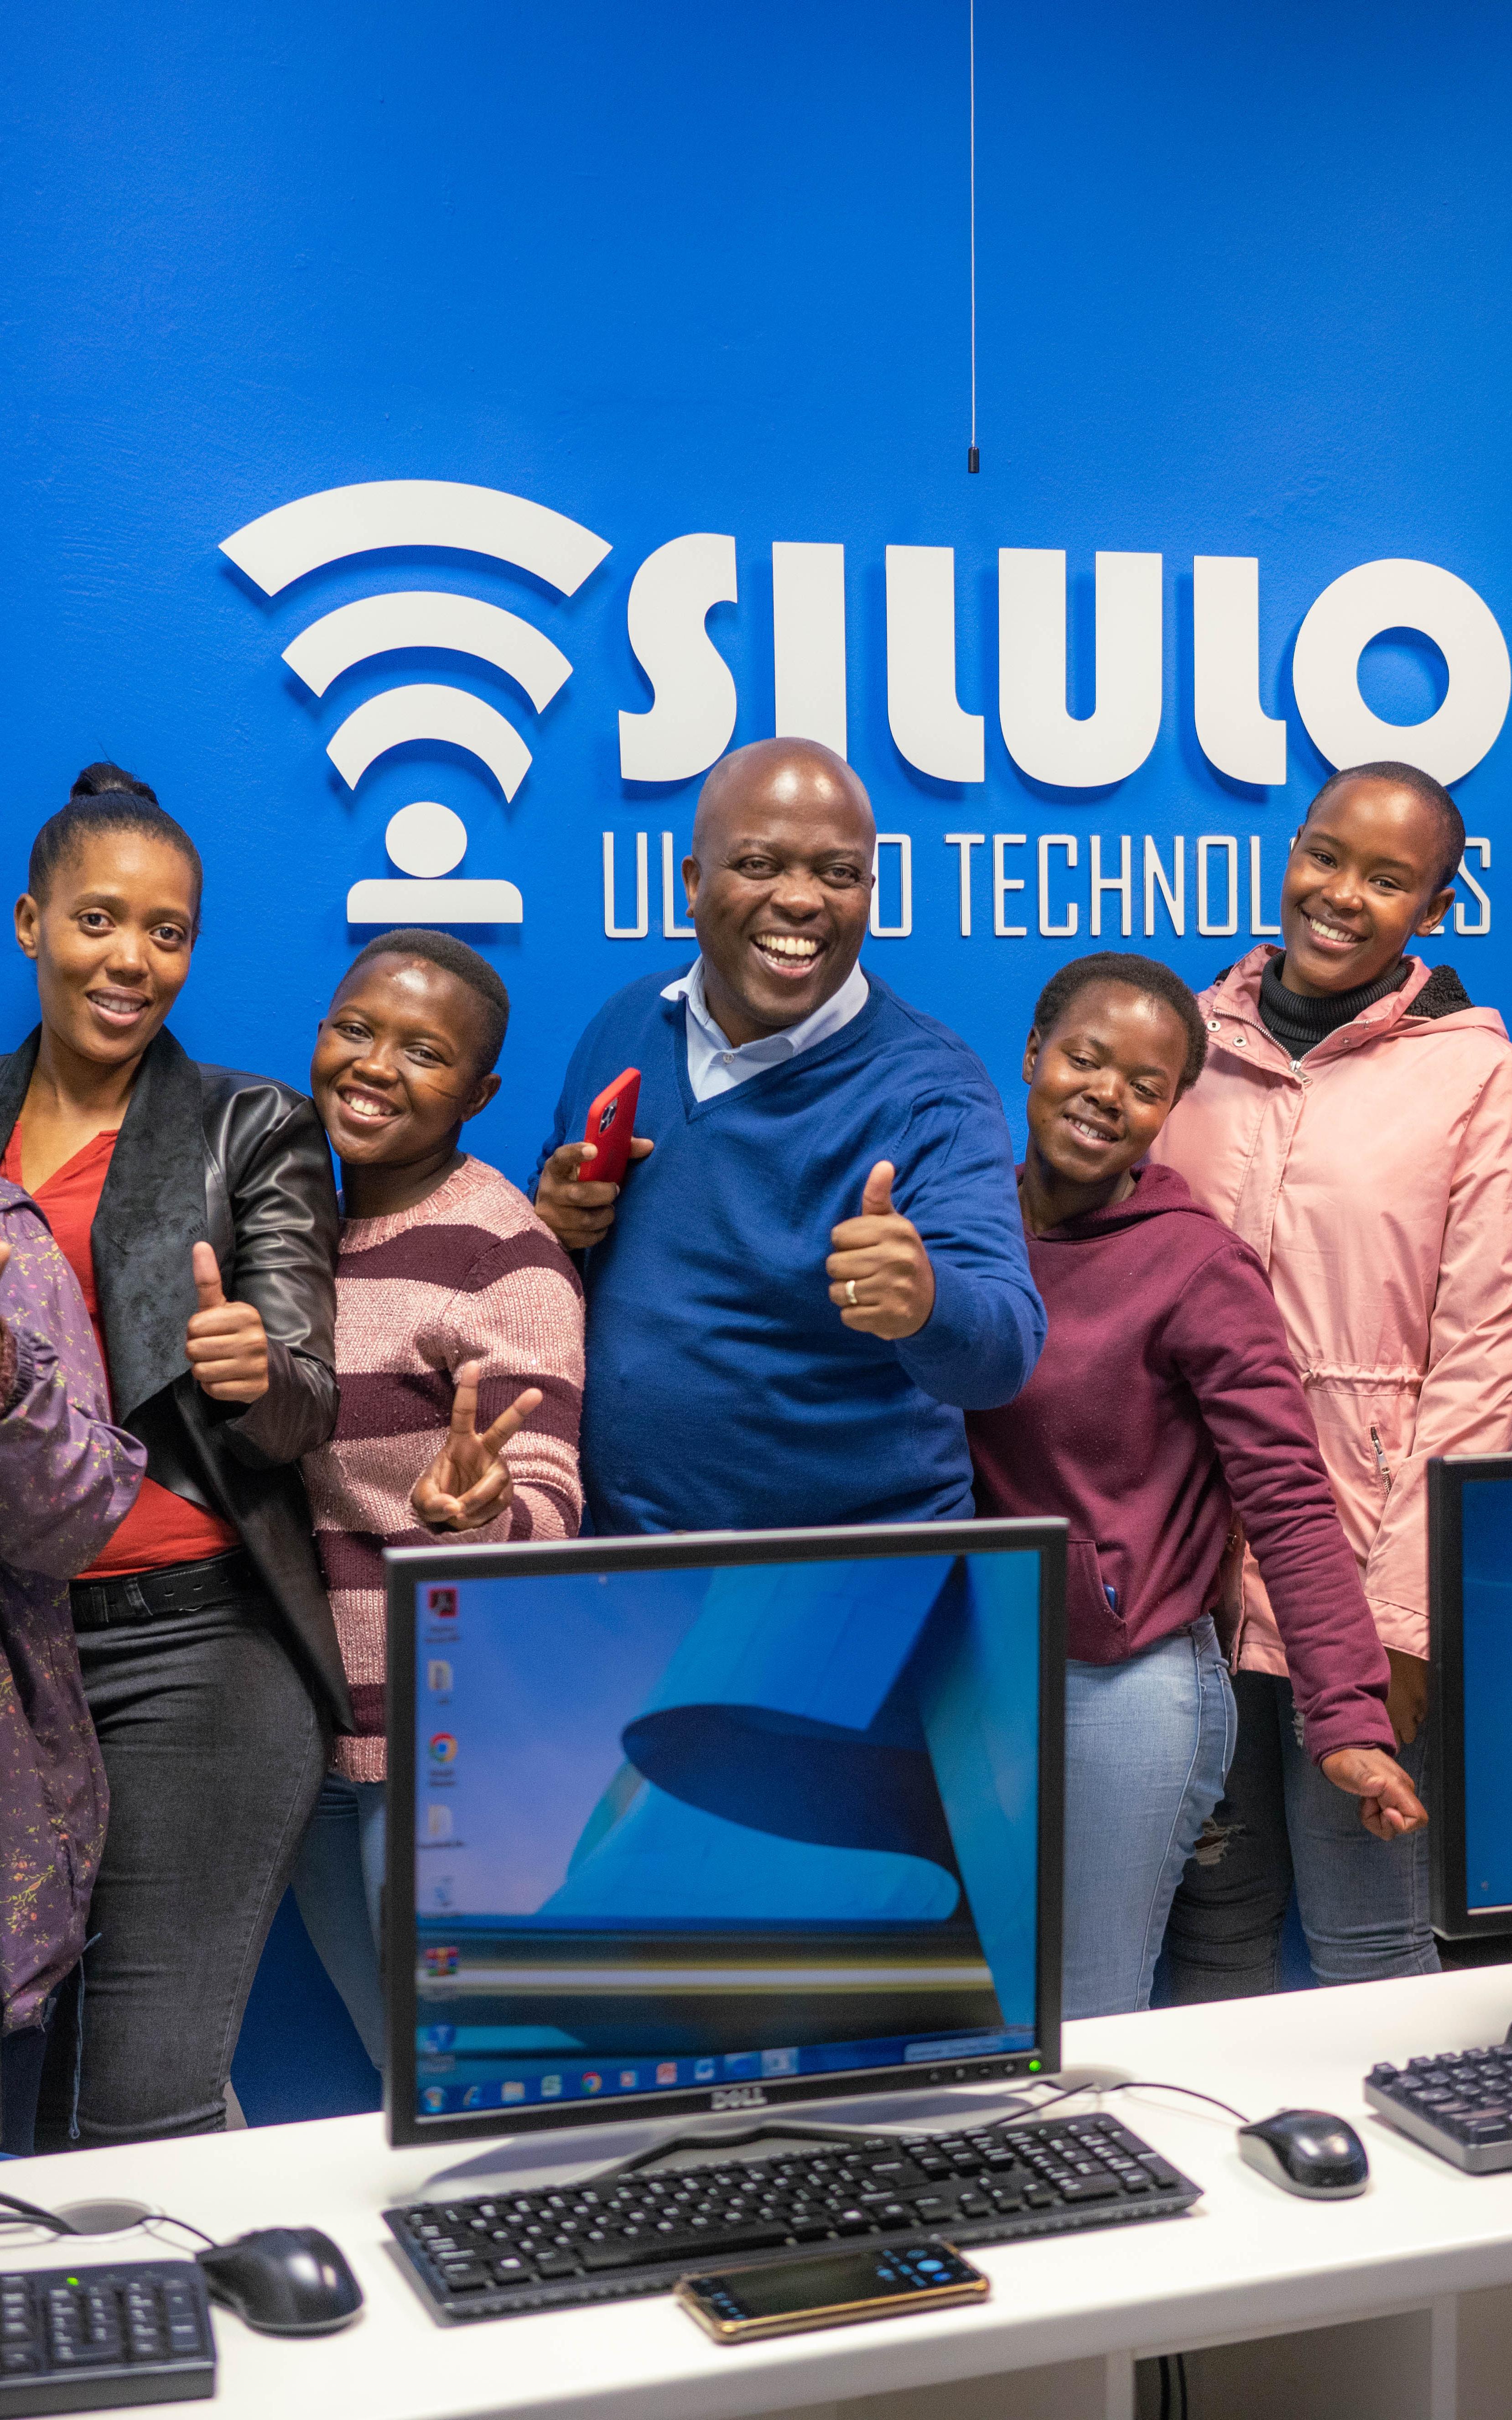 This tech entrepreneur bridging the digital divide across South Africa’s townships.